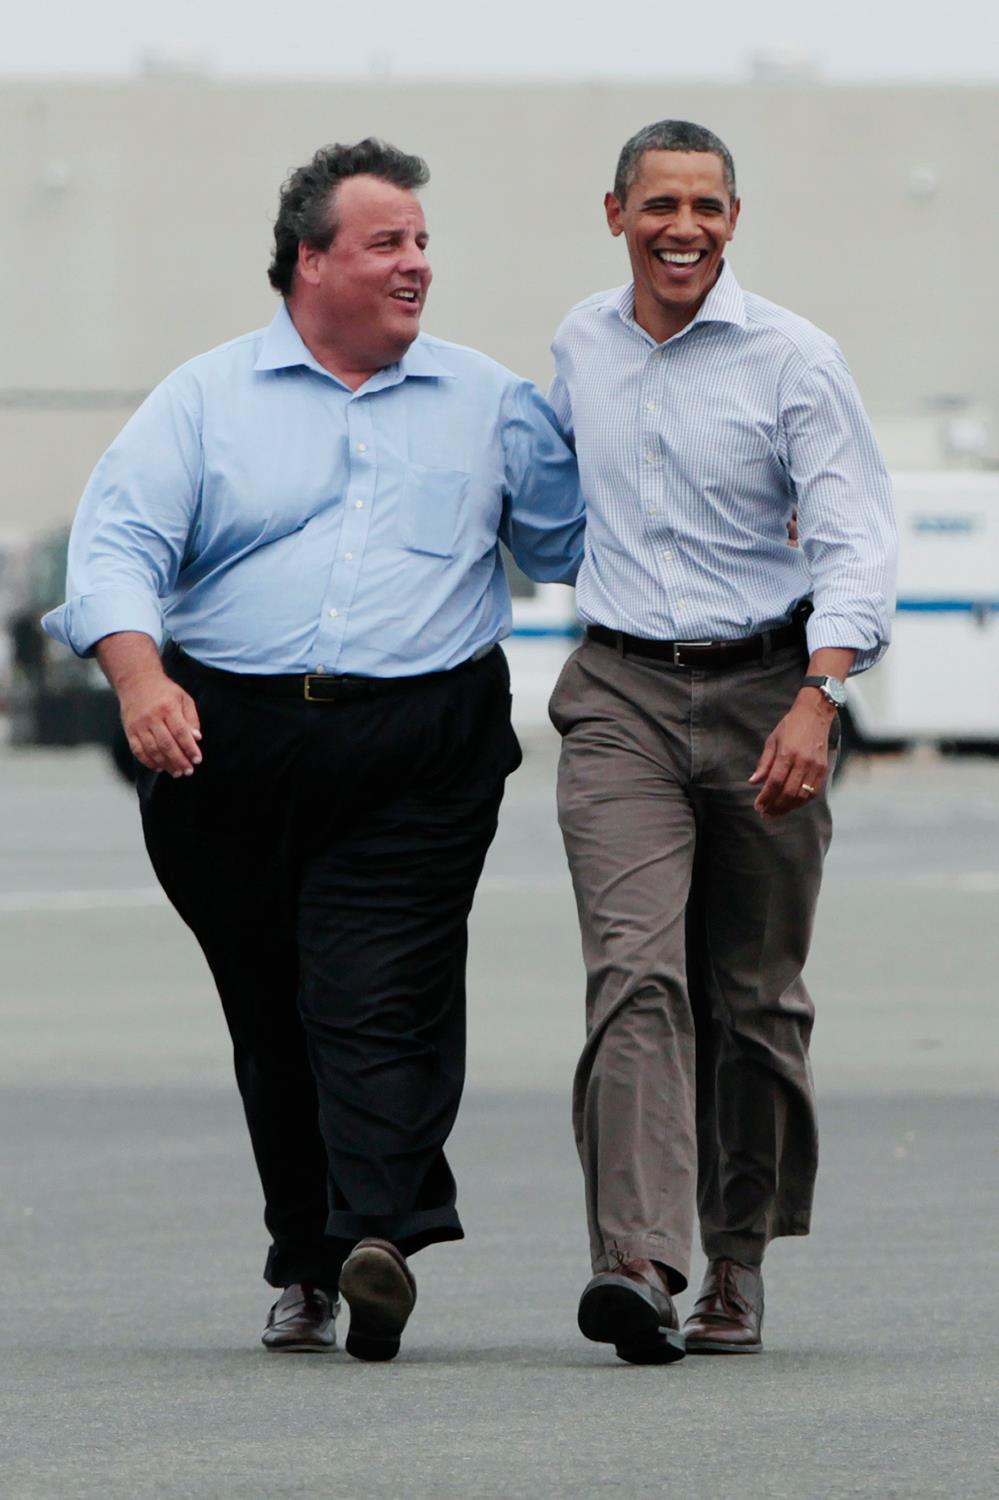 Christie+&+Obama.jpg